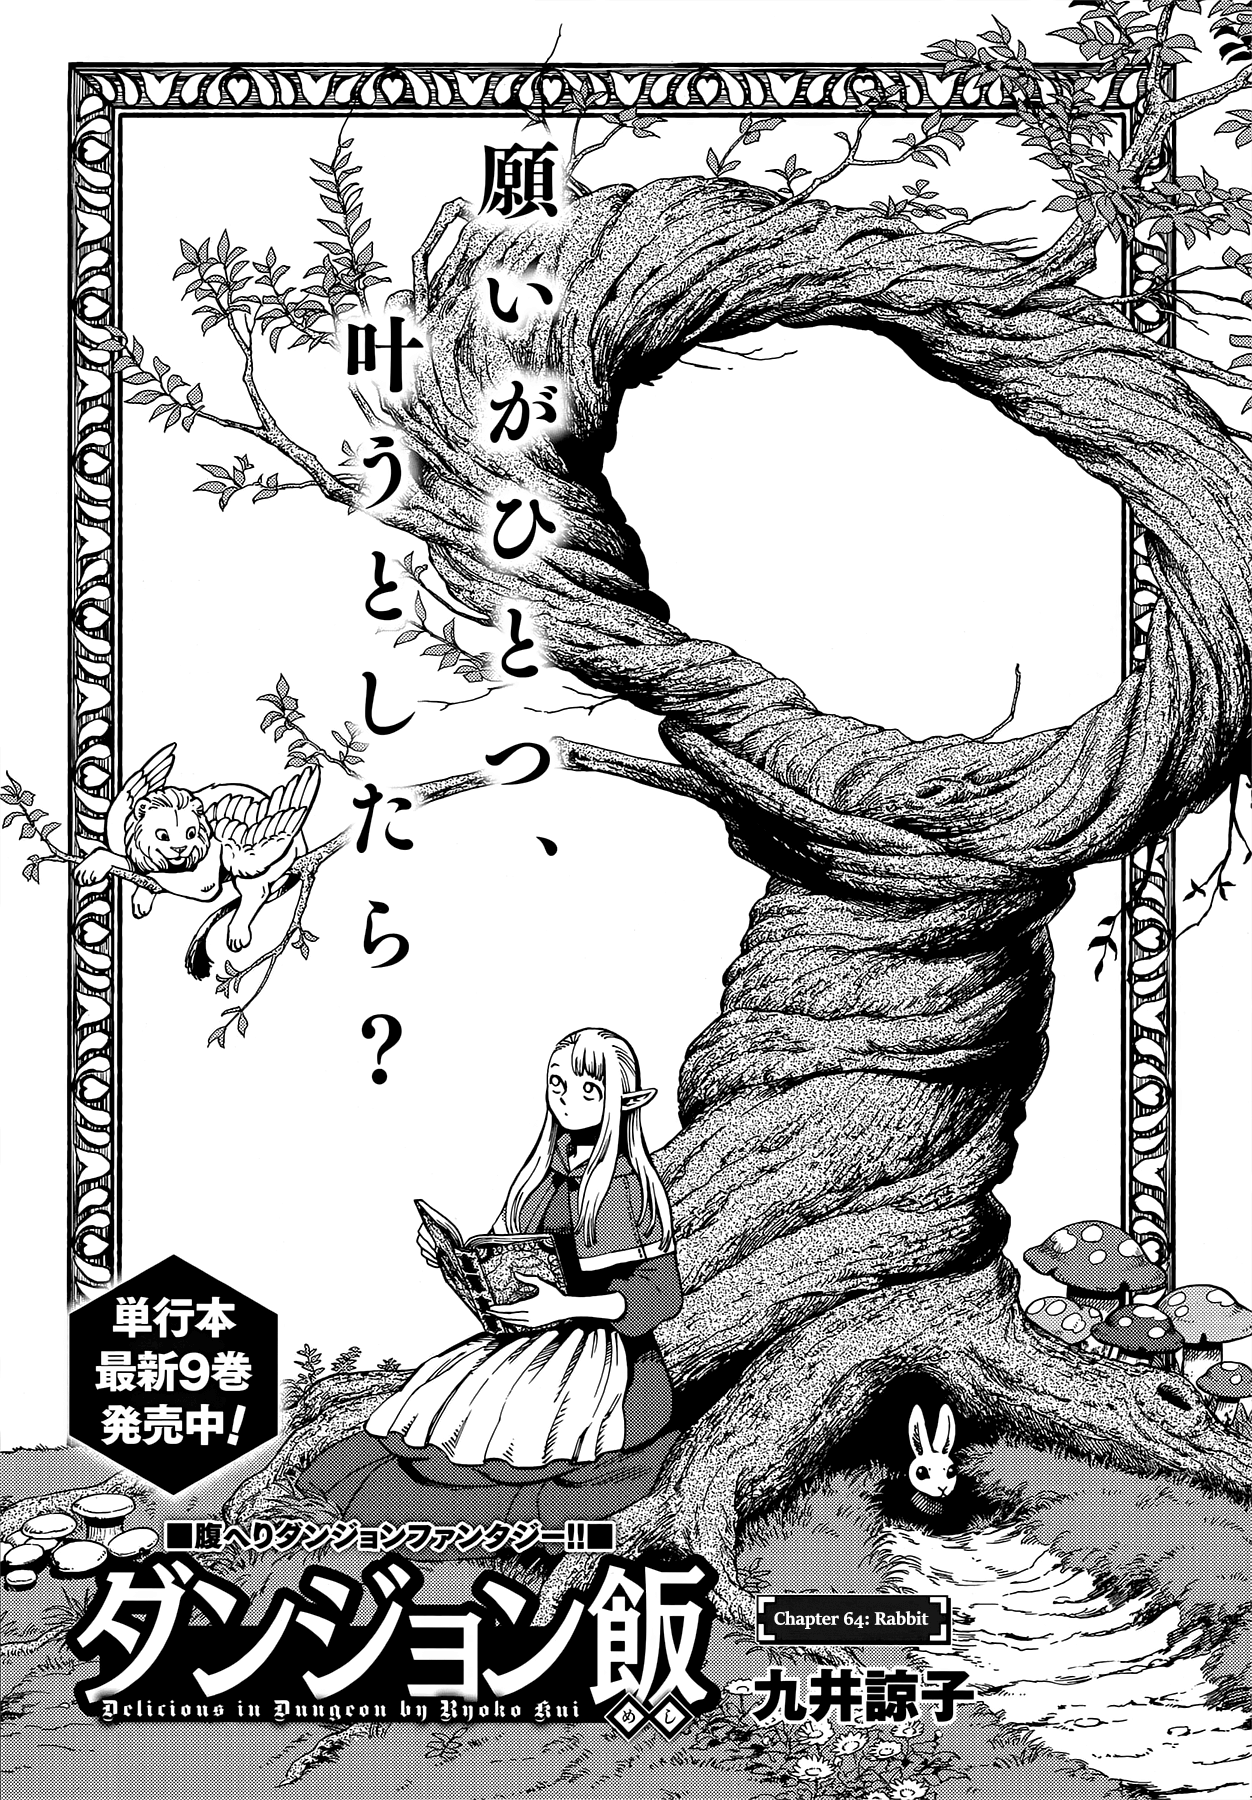 Dungeon Meshi Vol.10-Chapter.64-Rabbit Image